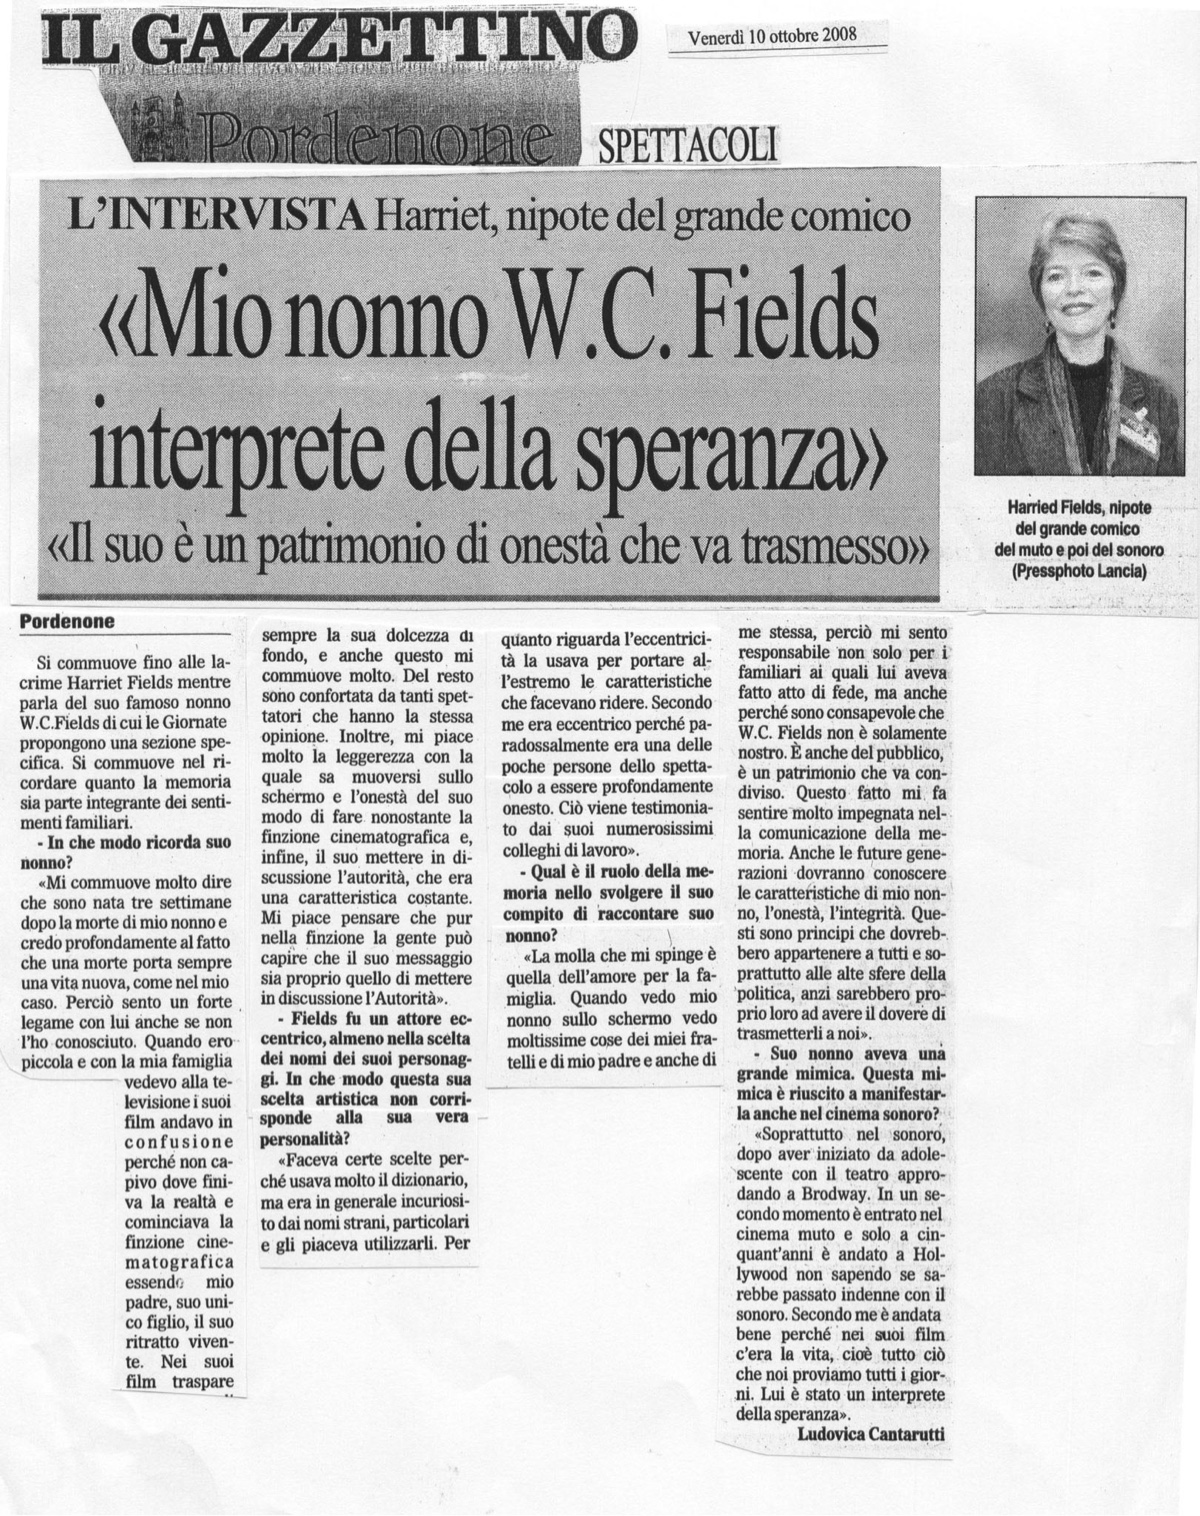 Il Gazzettino article clipping on W.C. Fields